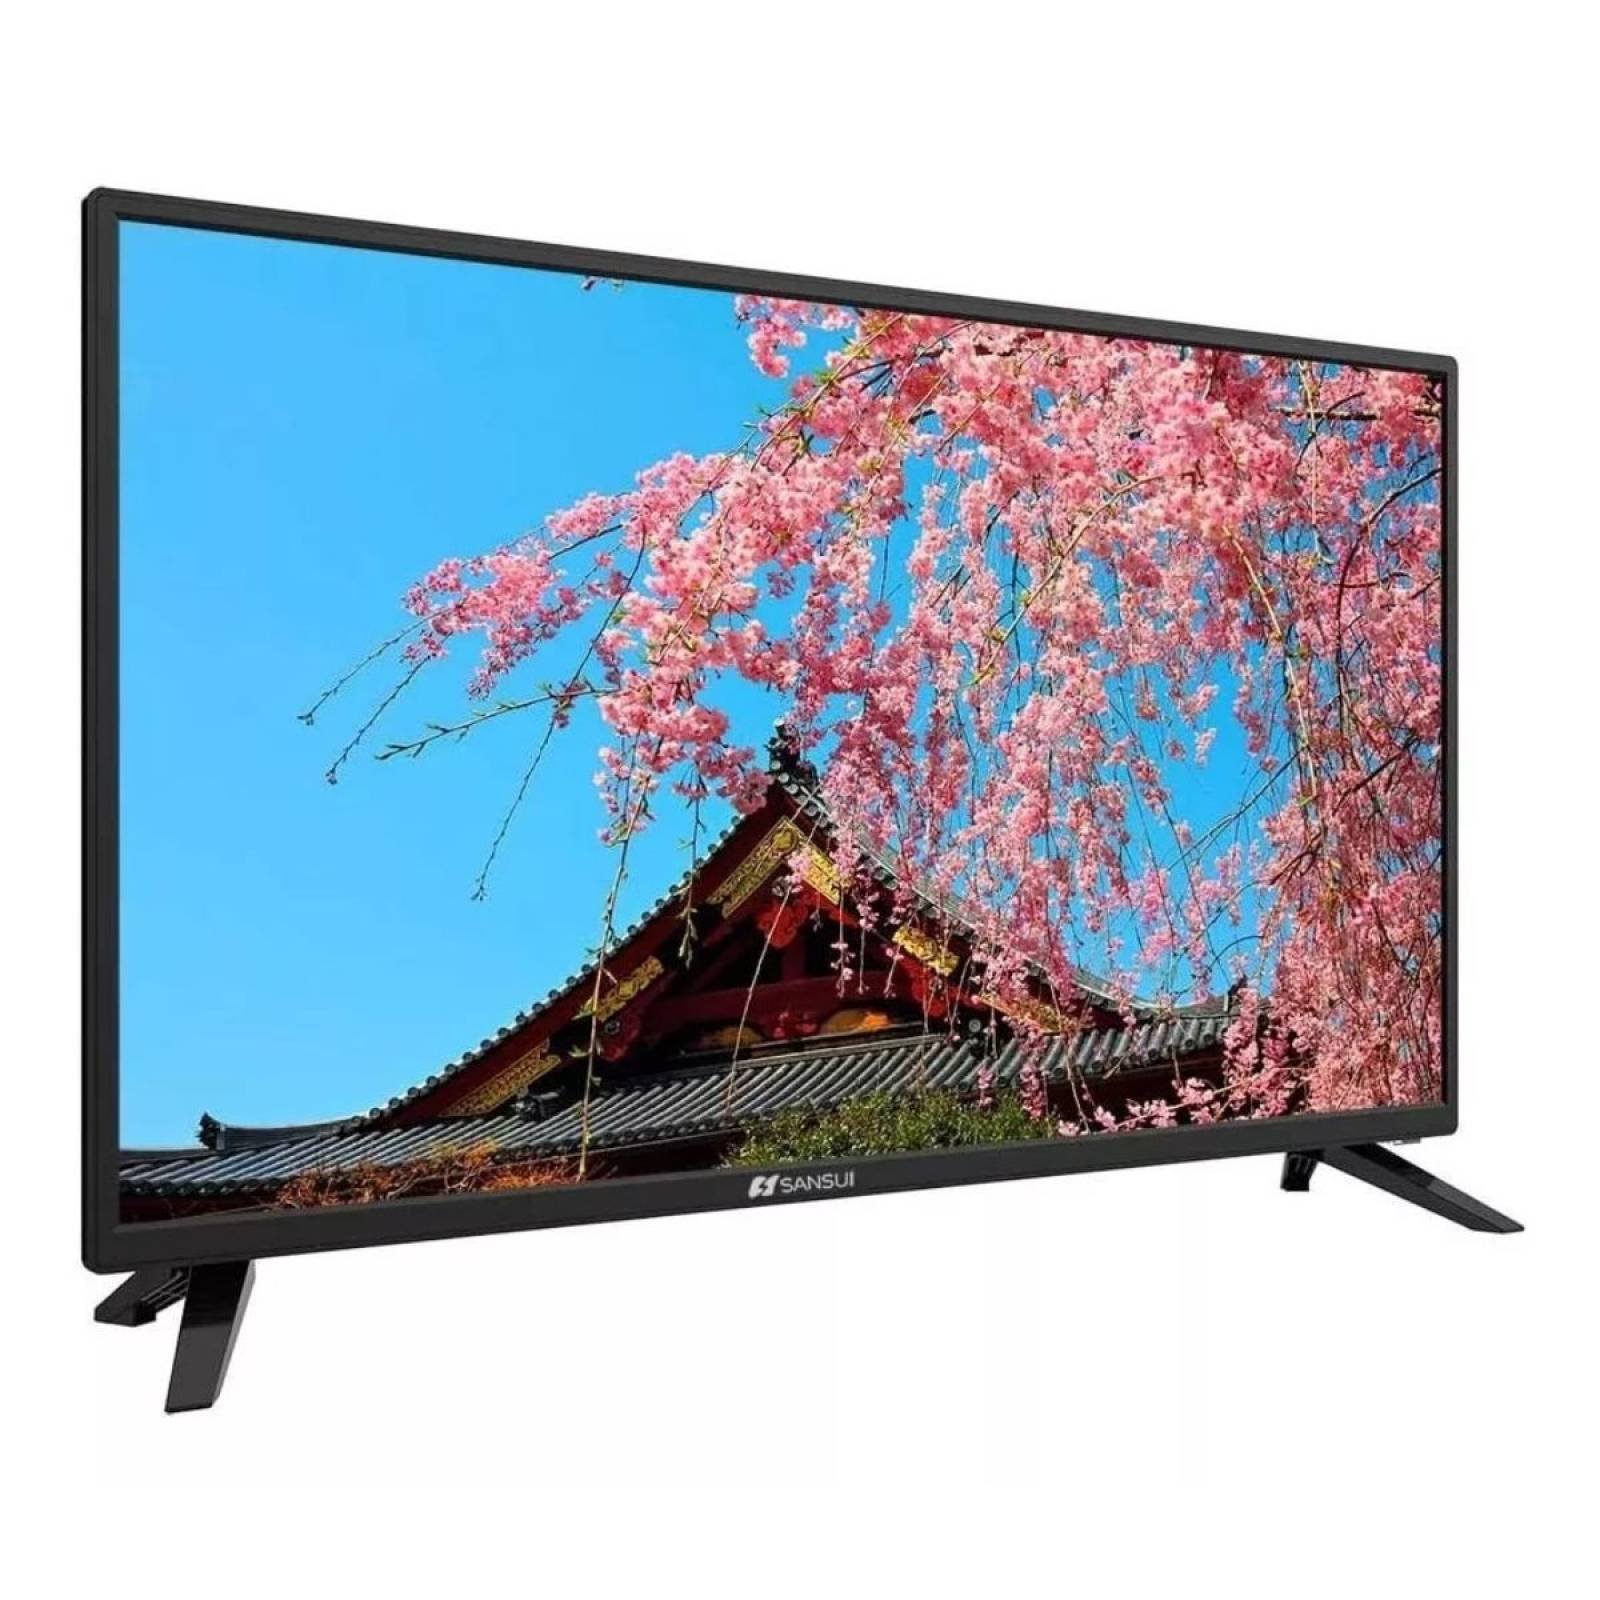 Pantalla Smart TV Sansui LED de 24 pulgadas Full HD SMX24T1HN con